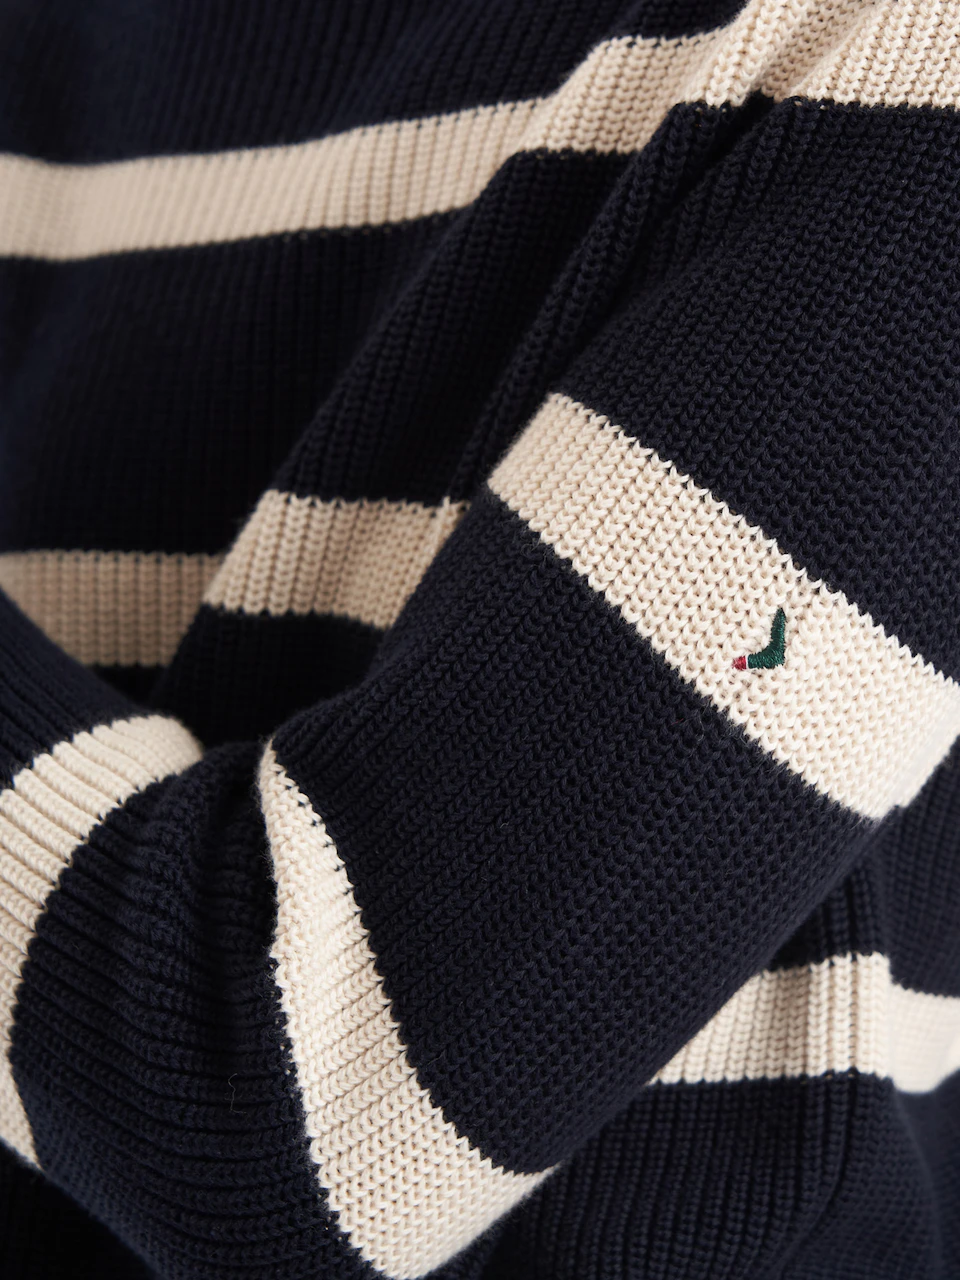 Boomerang - Leonie Organic Cotton Sweater Stripe, Night Sky